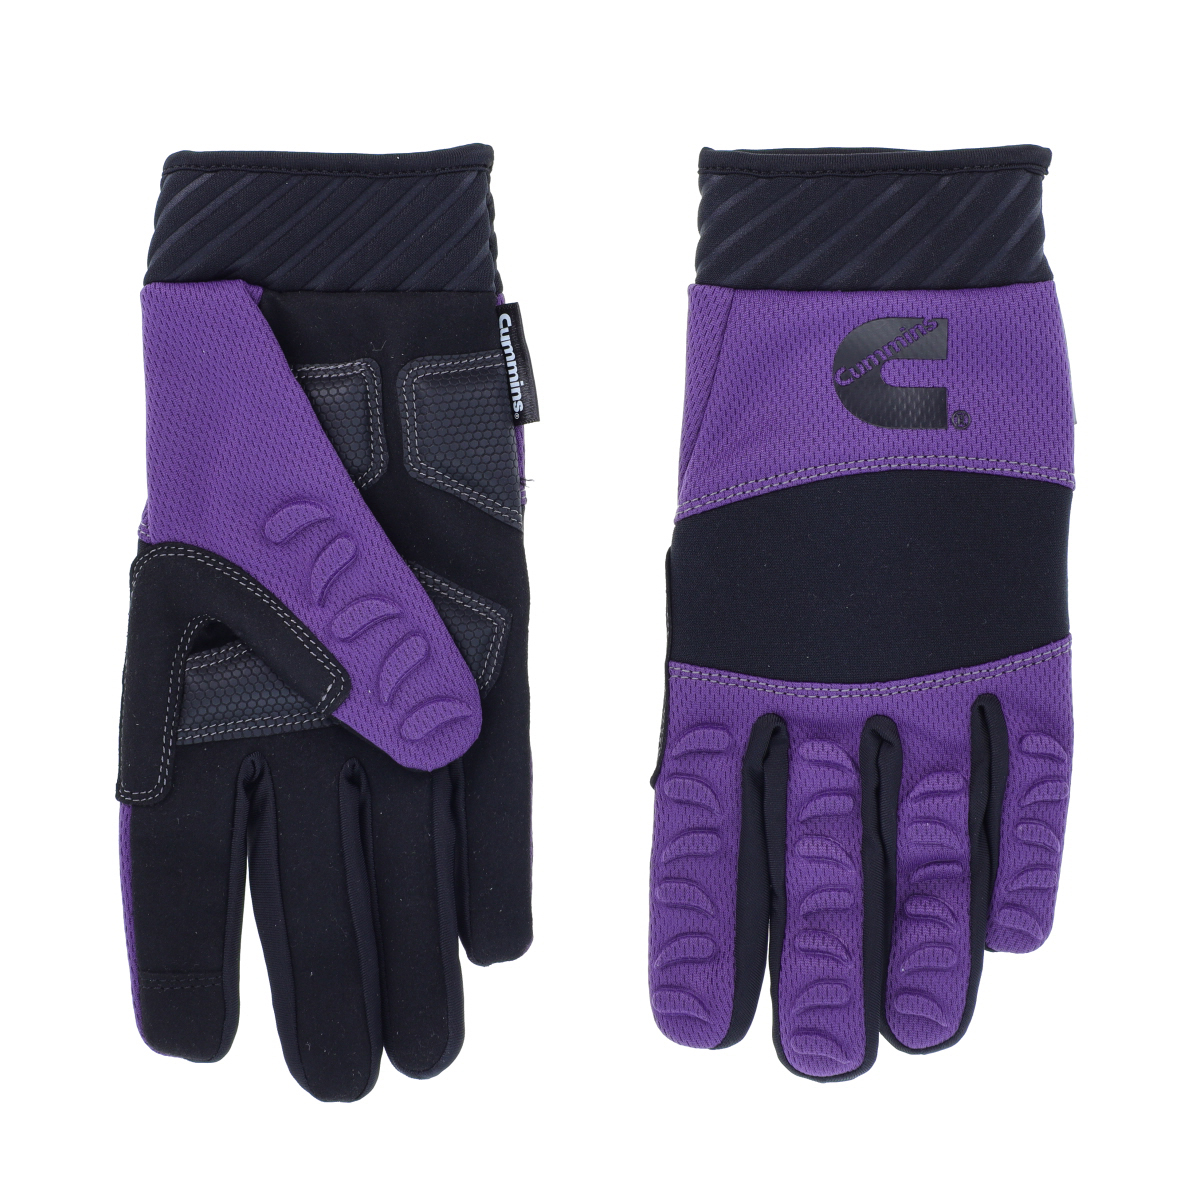 Cummins Womens Mechanic Glove CMN35157 - Purple and Black Synthetic Leather Anti-Vibration Anti-Abrasion Work Gloves All Season 